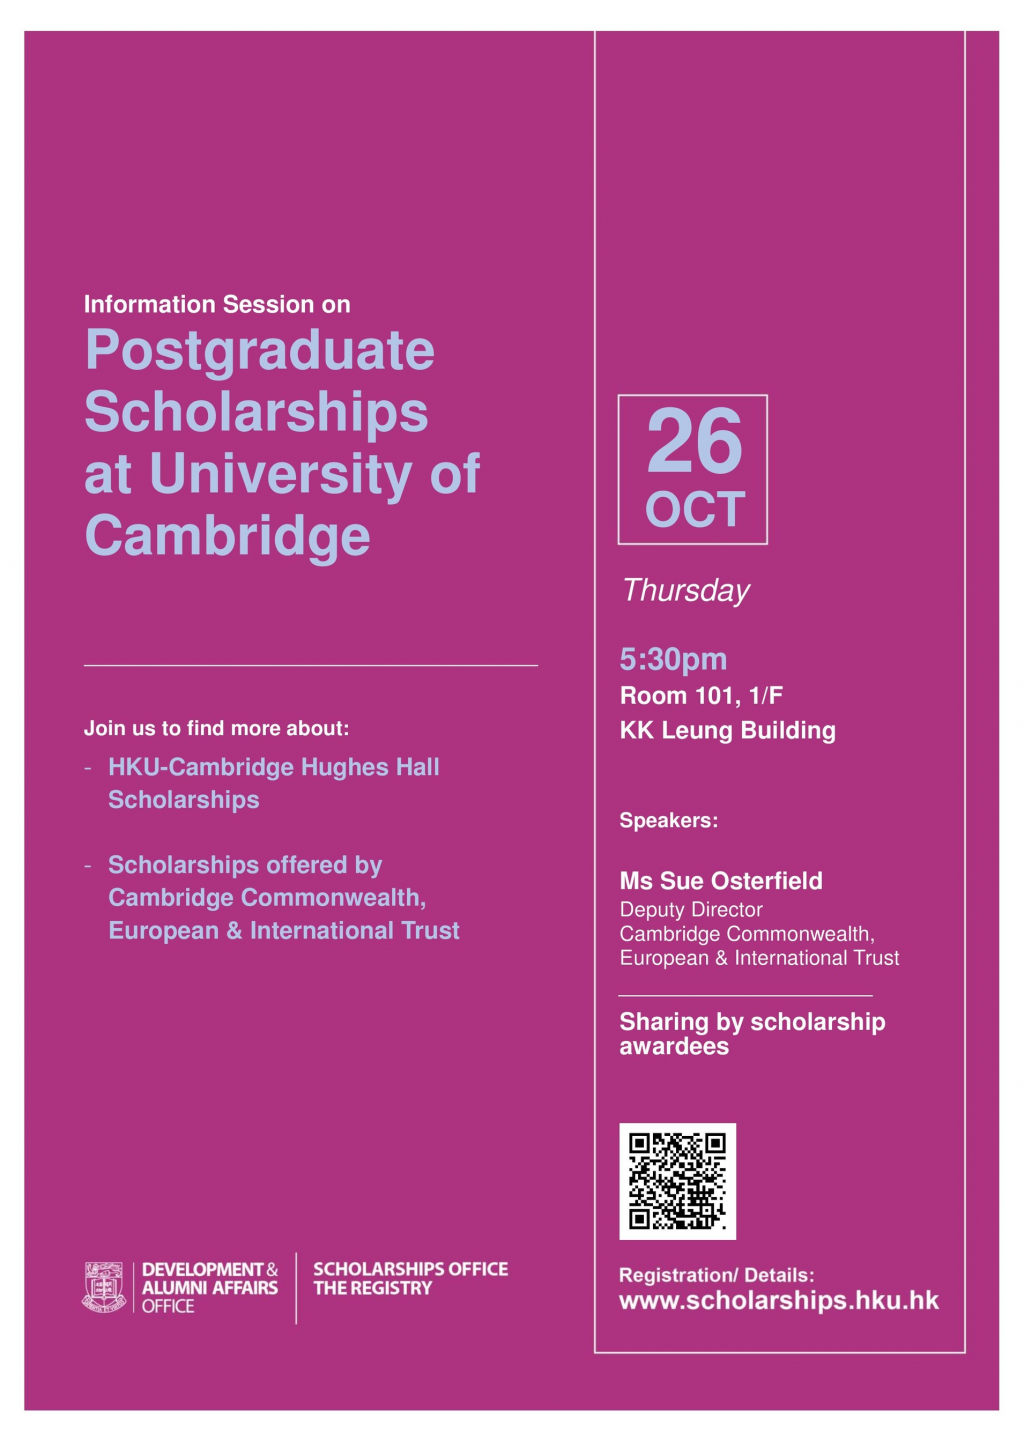 PG Scholarships at University of Cambridge